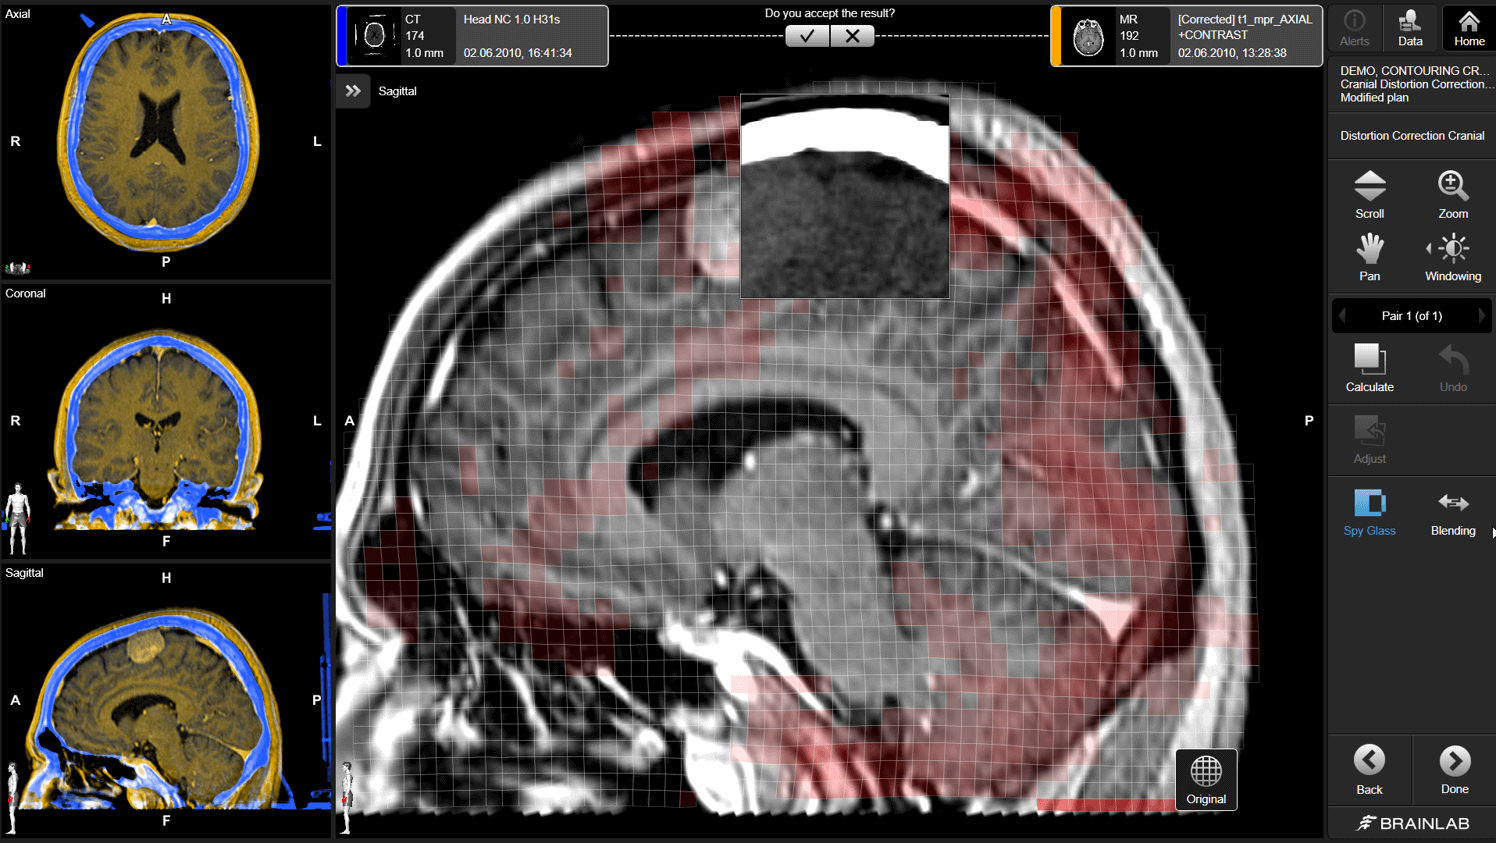 Brainlab Elements Distortion Correction 的软件界面，显示脑部的 MR 和 CT 的融合图像，该软件在影像融合期间的失真校正过程。